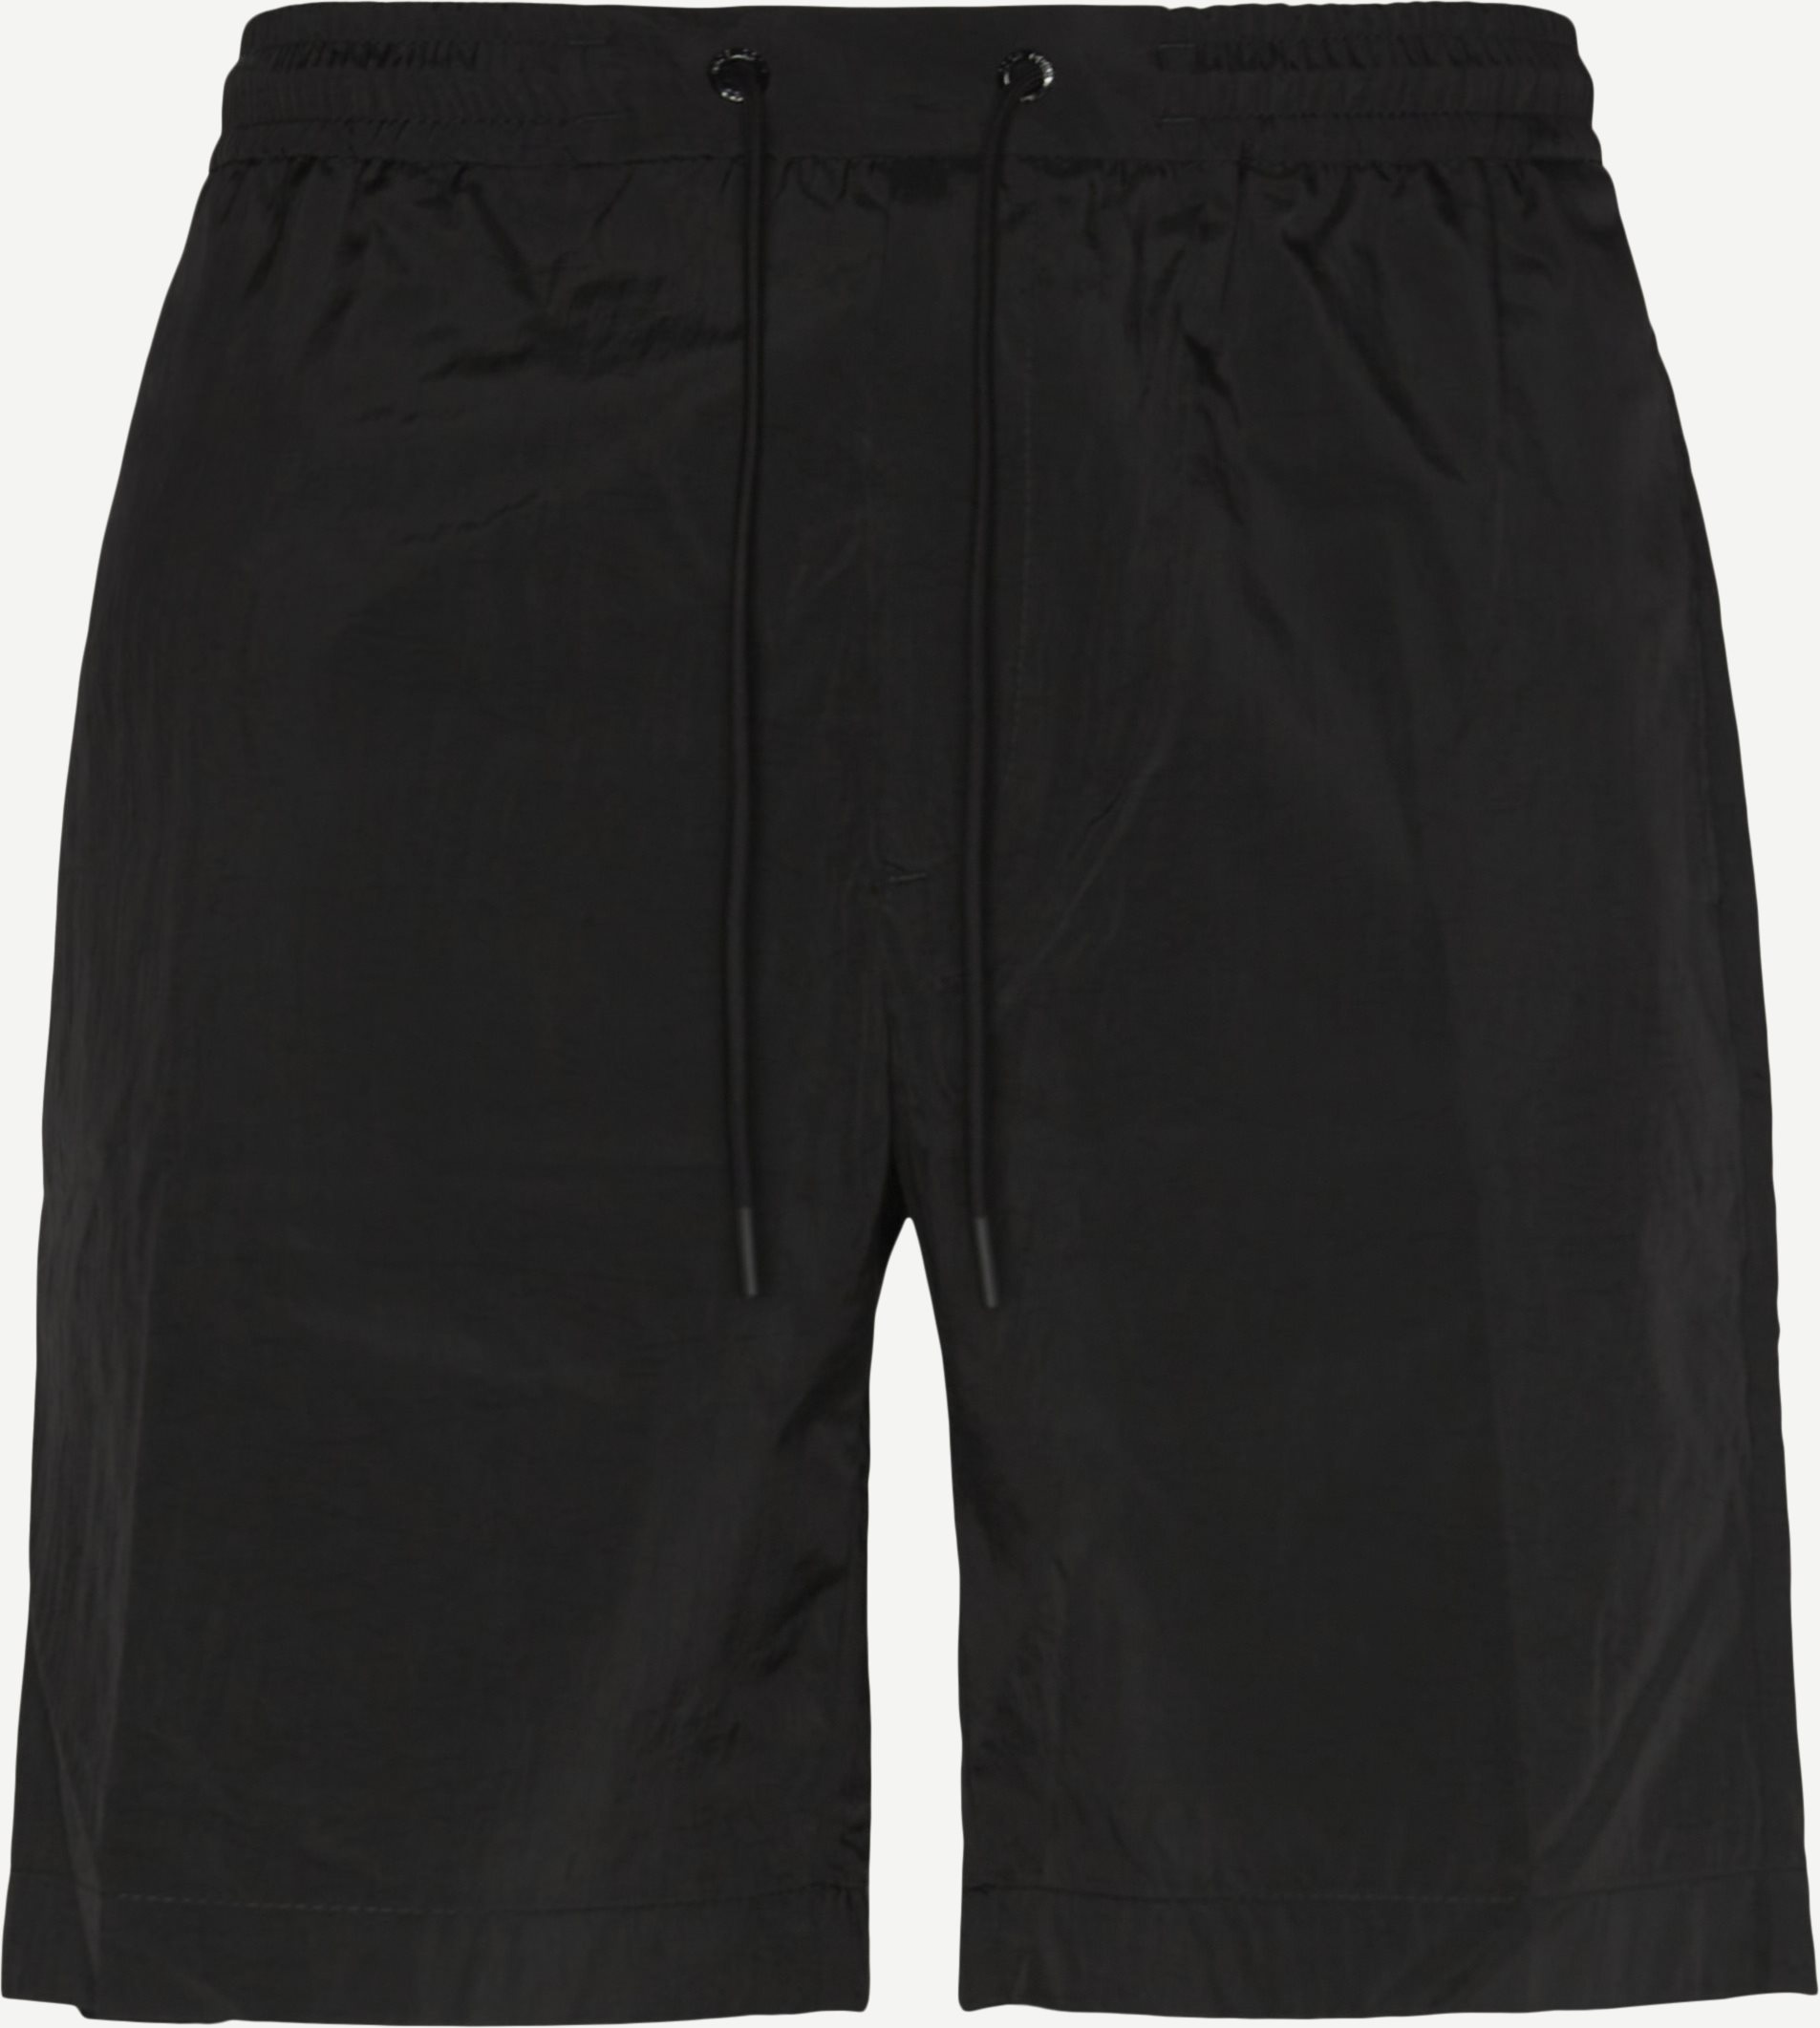 Kendo shorts - Shorts - Regular fit - Svart